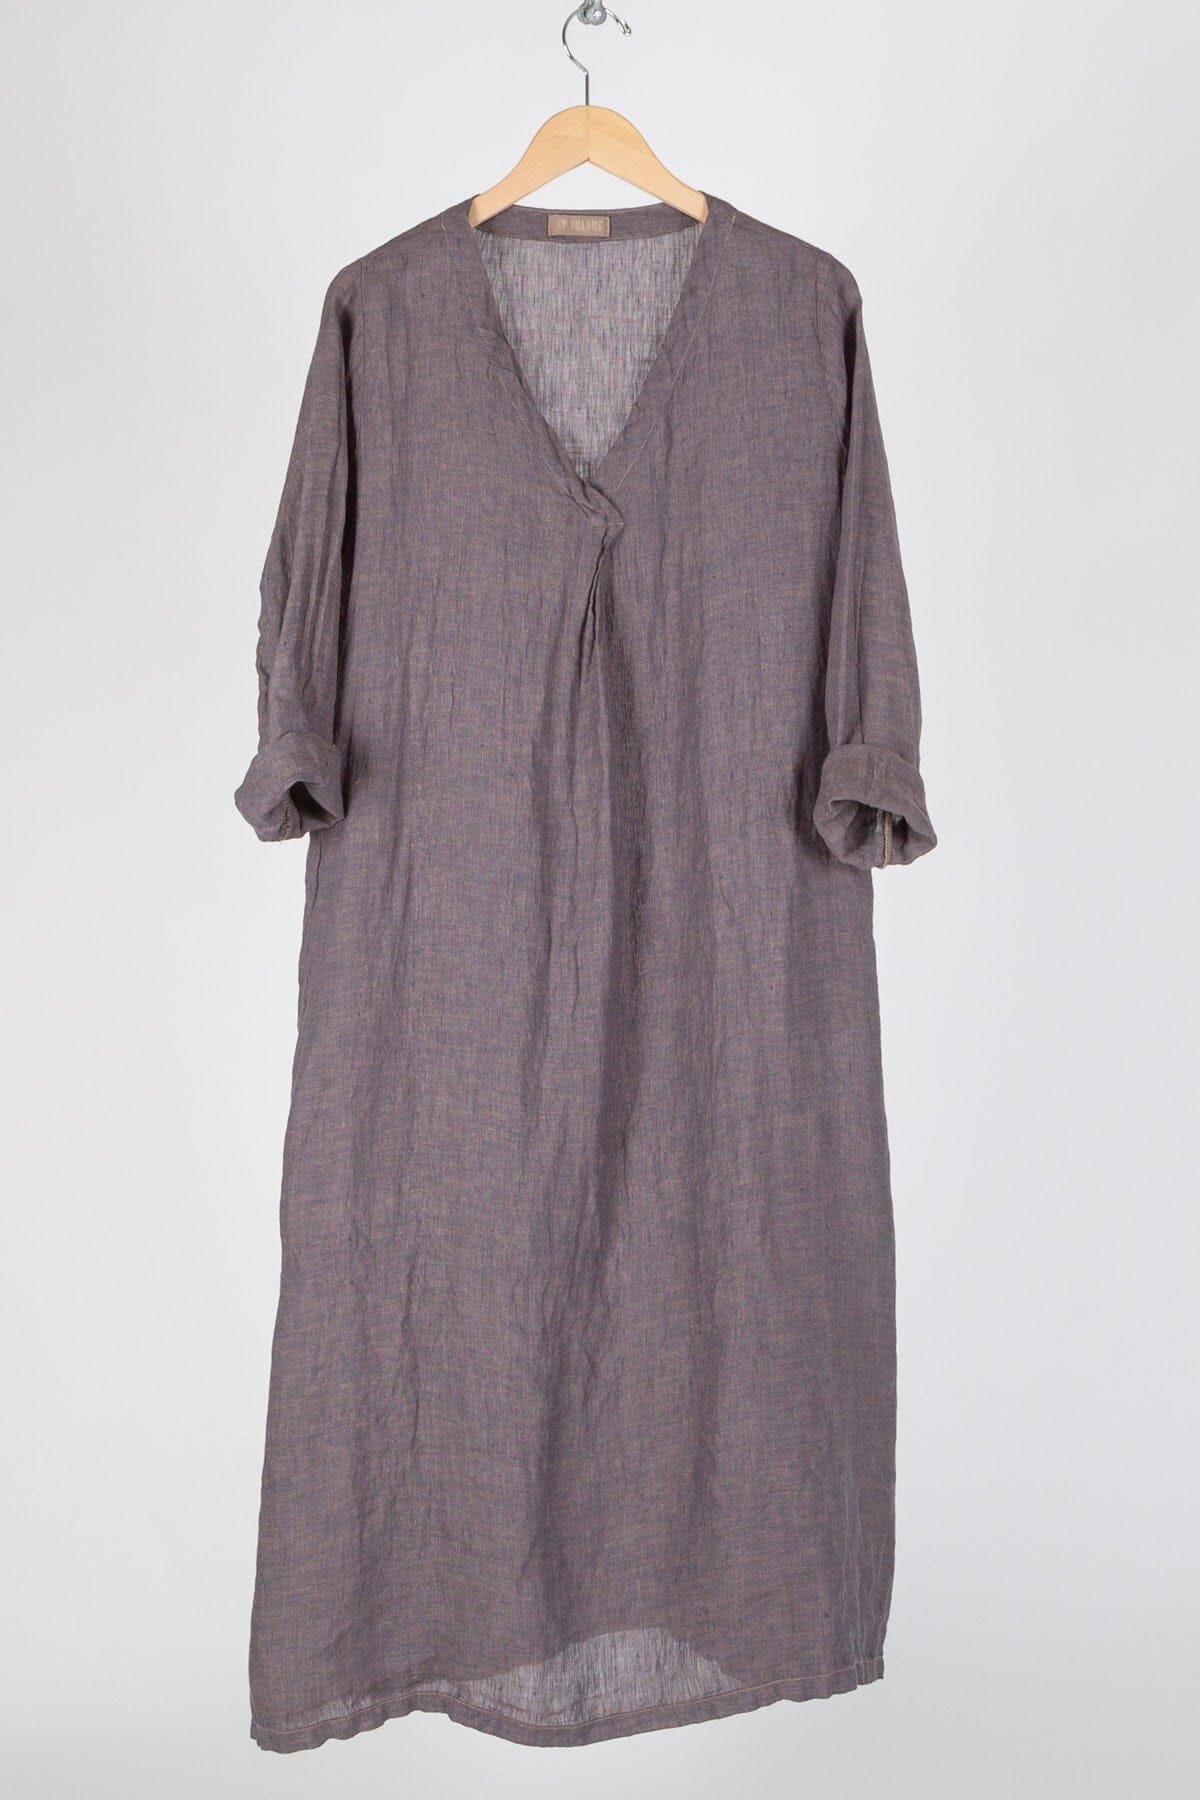 Mallory - Iridescent Linen Sale S90 - Iridescent Sale Dresses/Skirts CP Shades stone 162